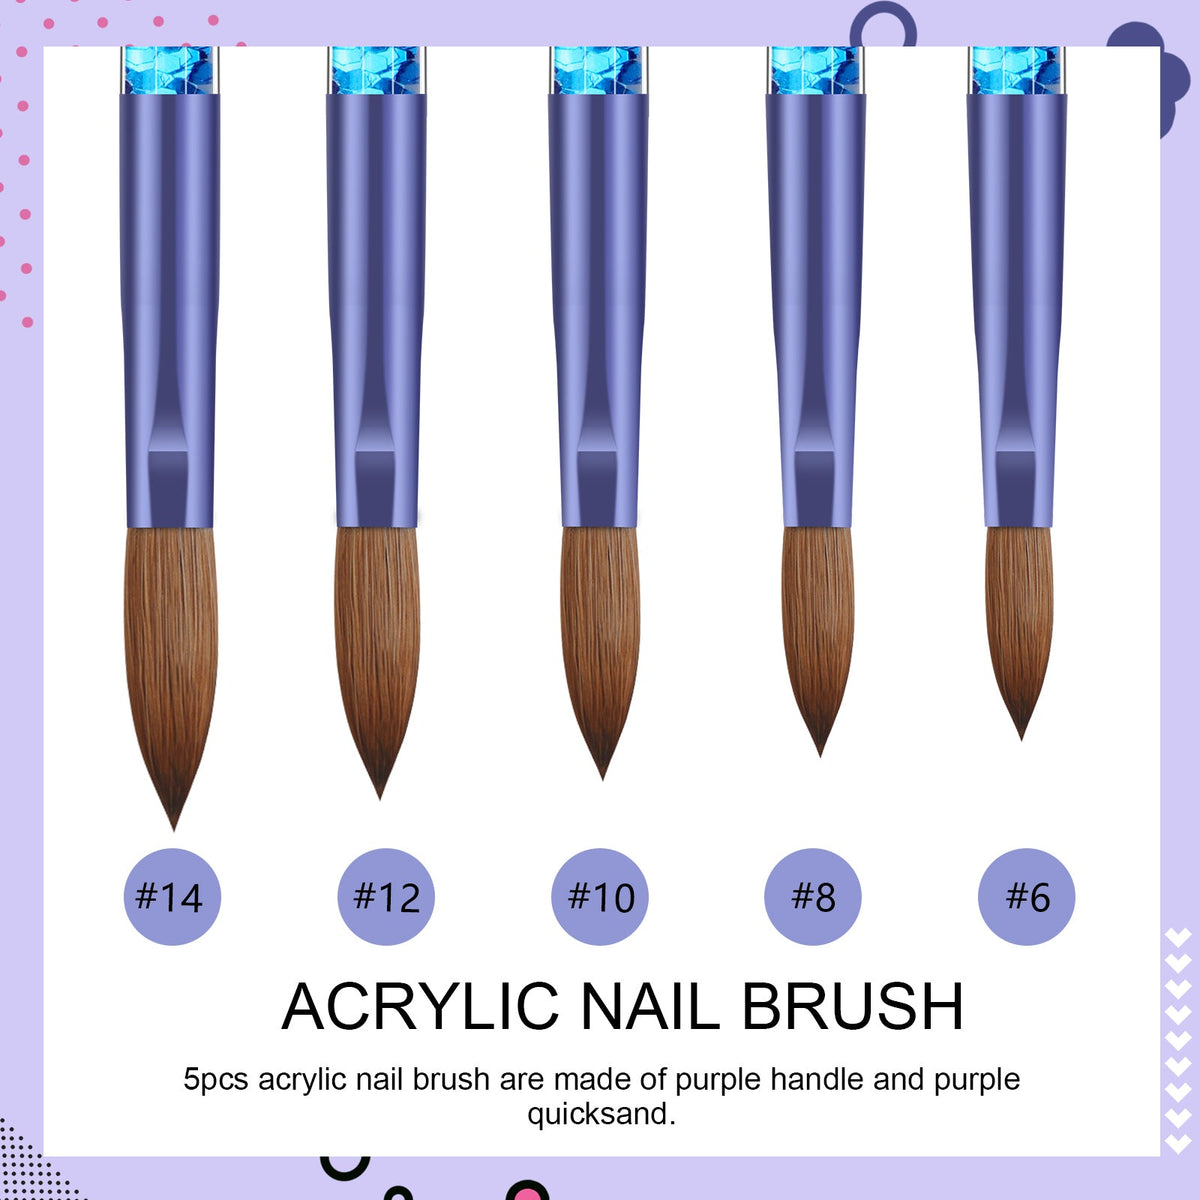 Saviland Acrylic Nail Brush Cleaner – 40ML Nail Art Brush Cleaner